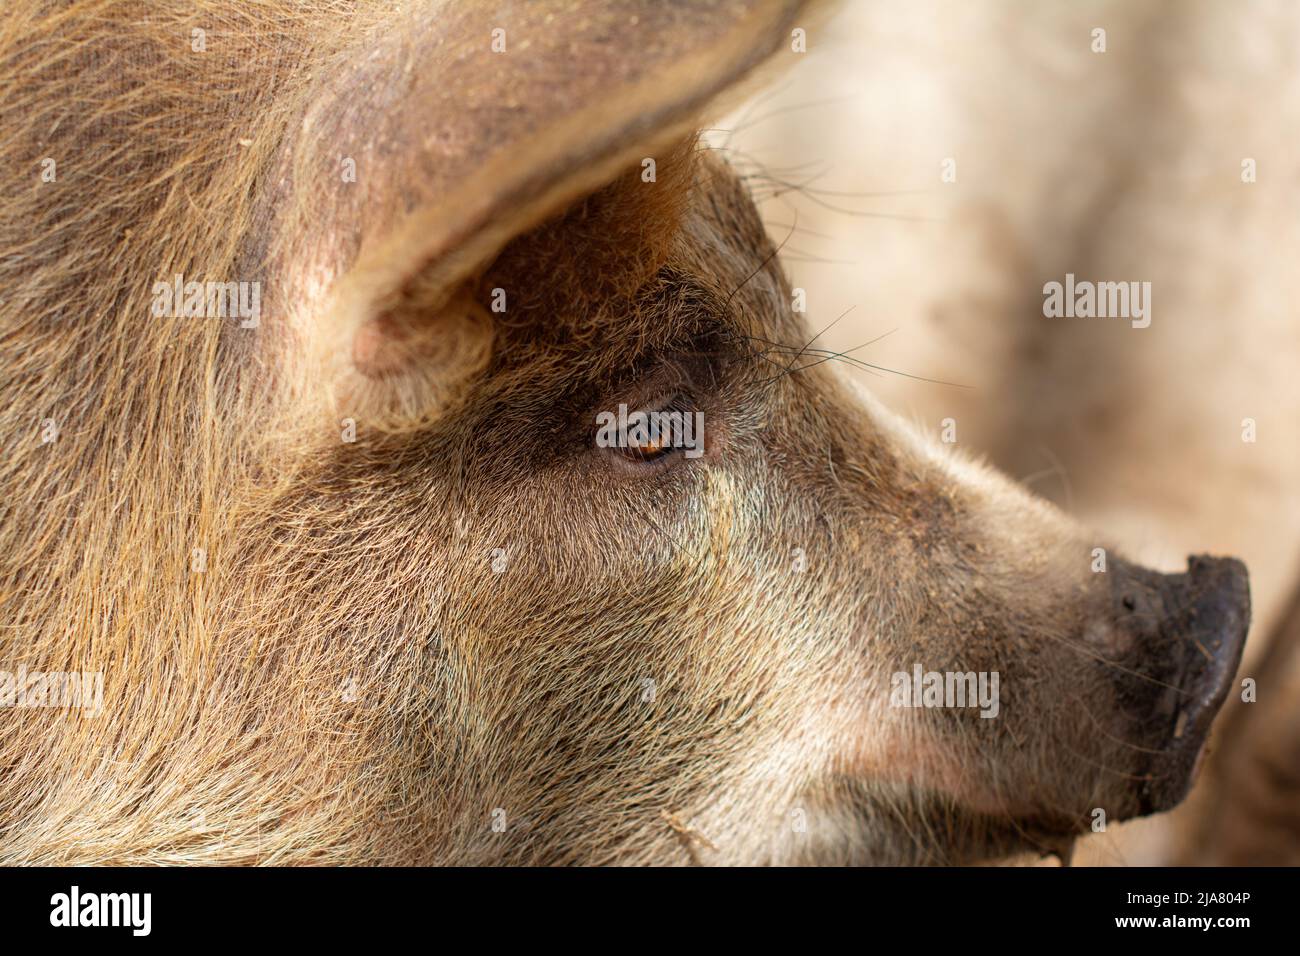 Pig head. Close up. Selective focus. Stock Photo